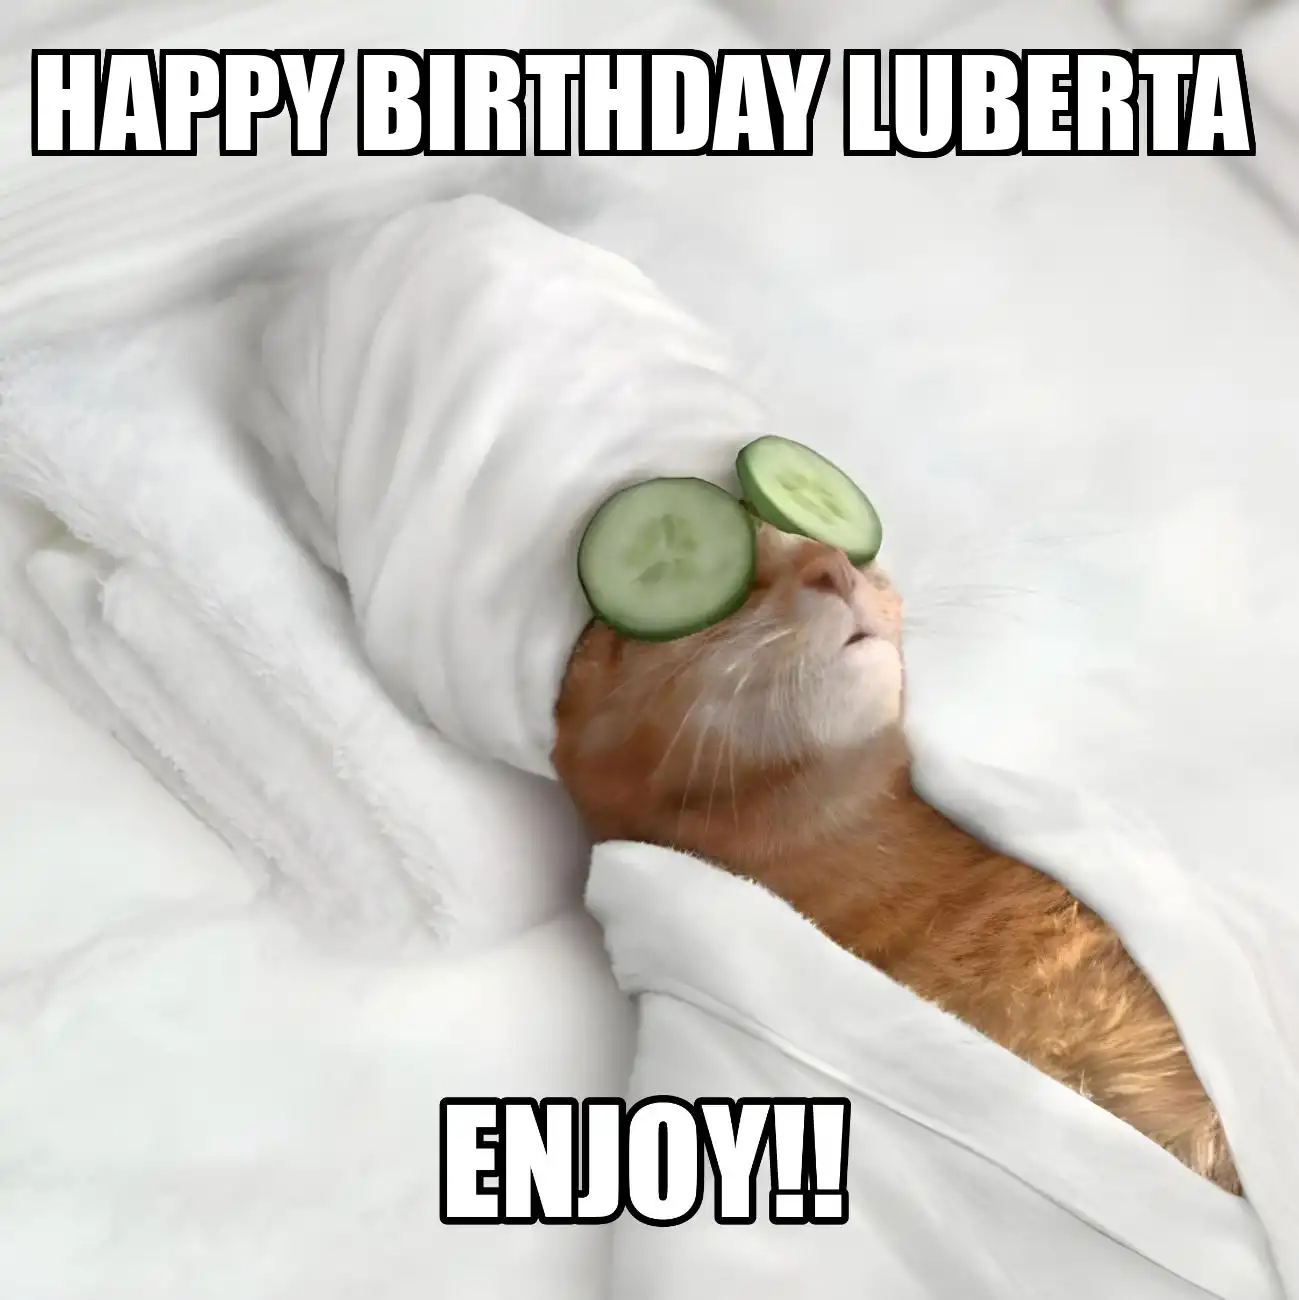 Happy Birthday Luberta Enjoy Cat Meme